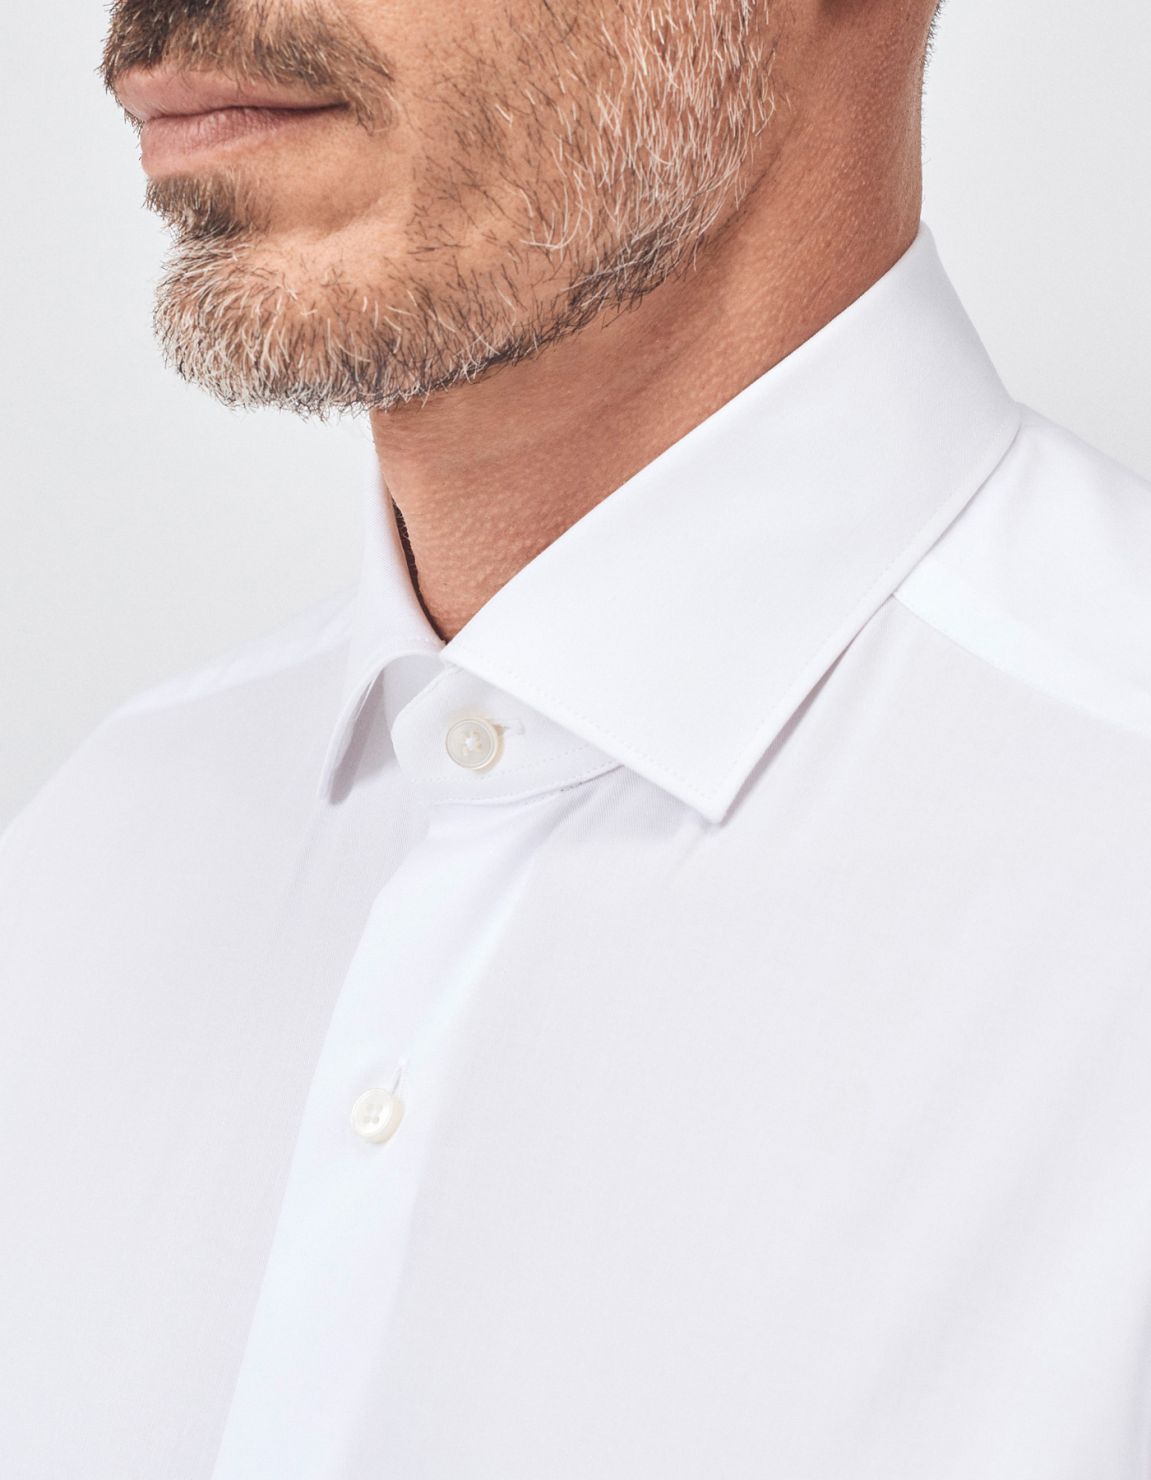 Shirt Collar small cutaway White Twill Evolution Classic Fit 3